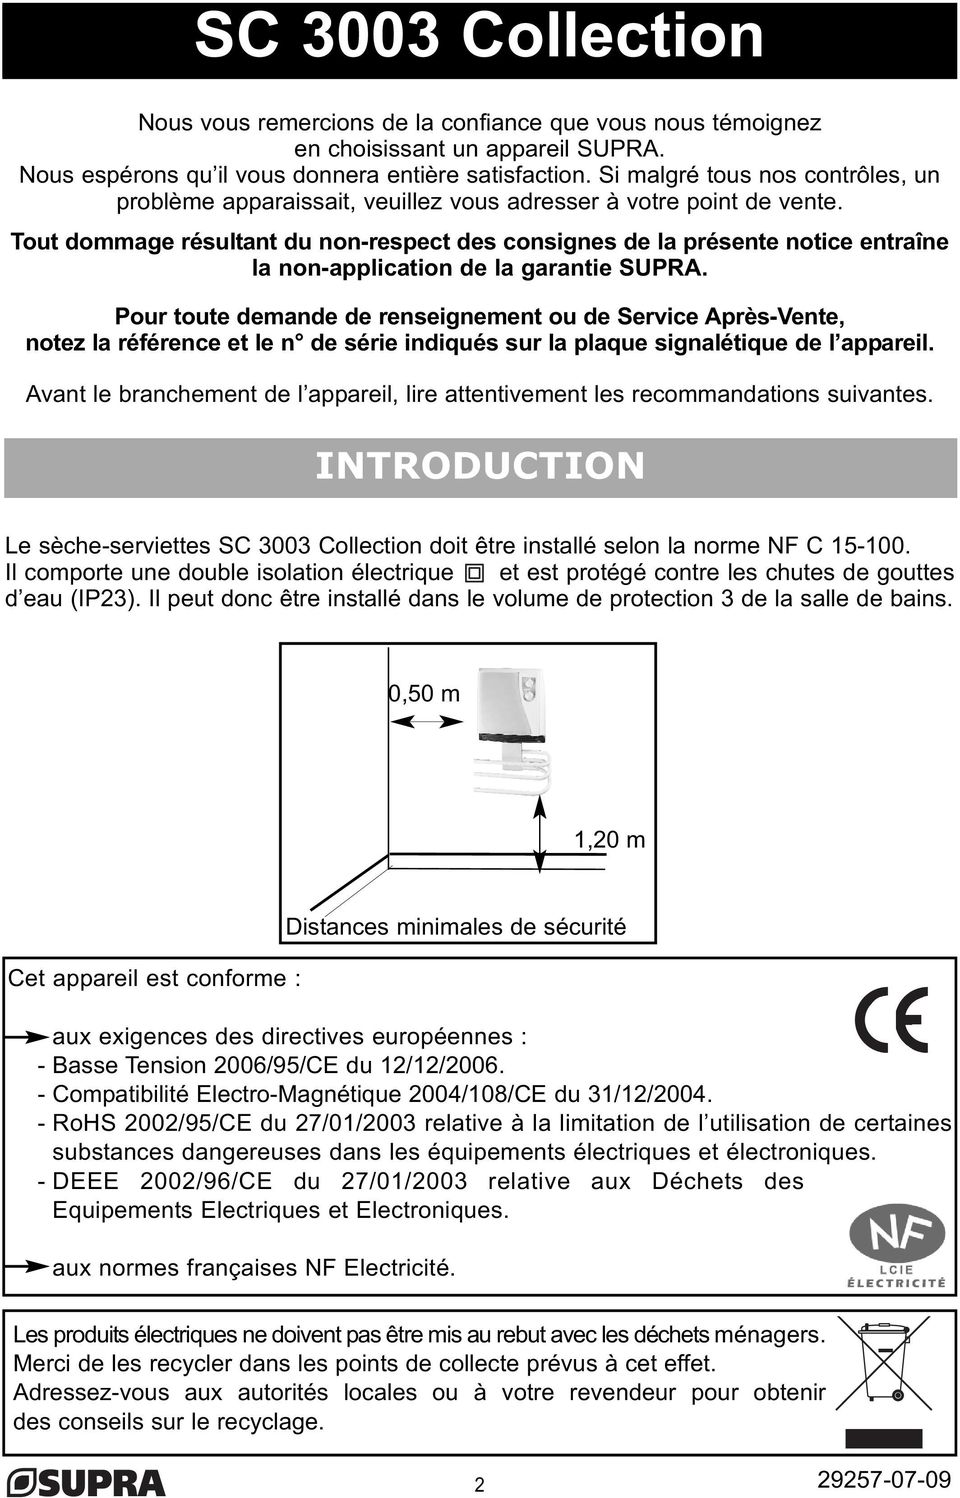 SC 3003 COLLECTION SOUFFLANT SÈCHE-SERVIETTES - PDF Free Download